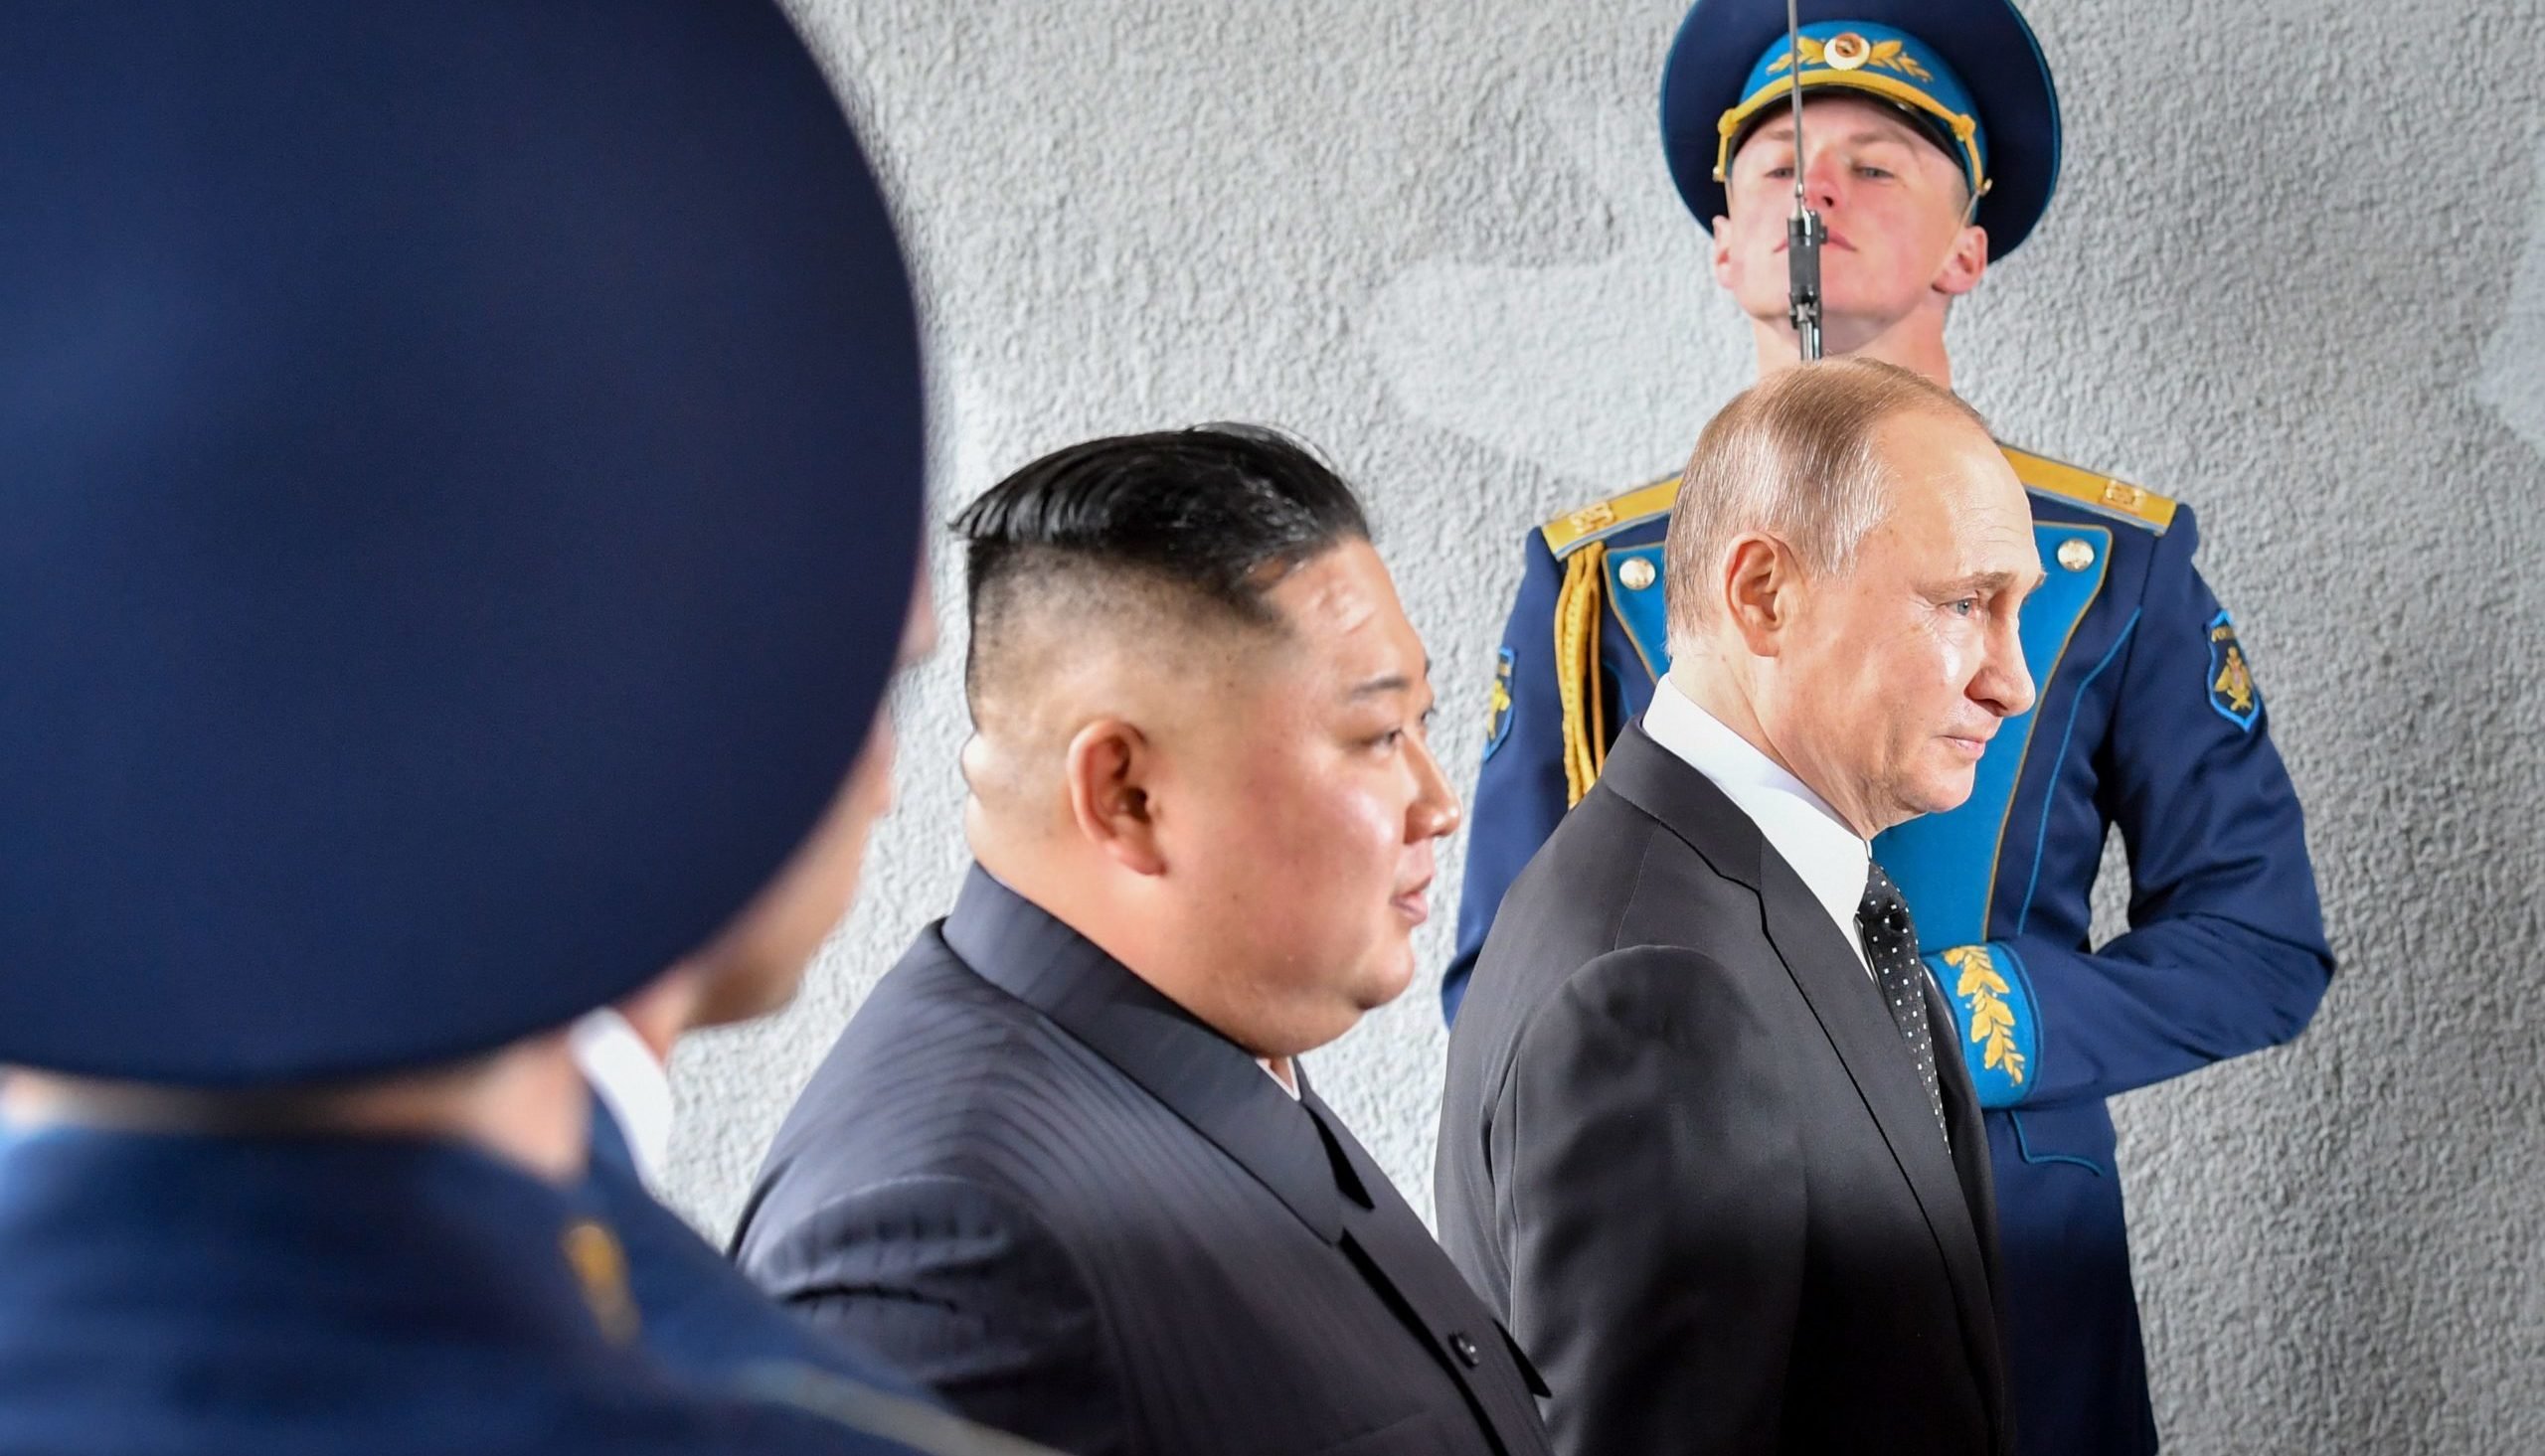 Kim and Putin on their way to a 2019 summit talk in Vladivostok, Russia.